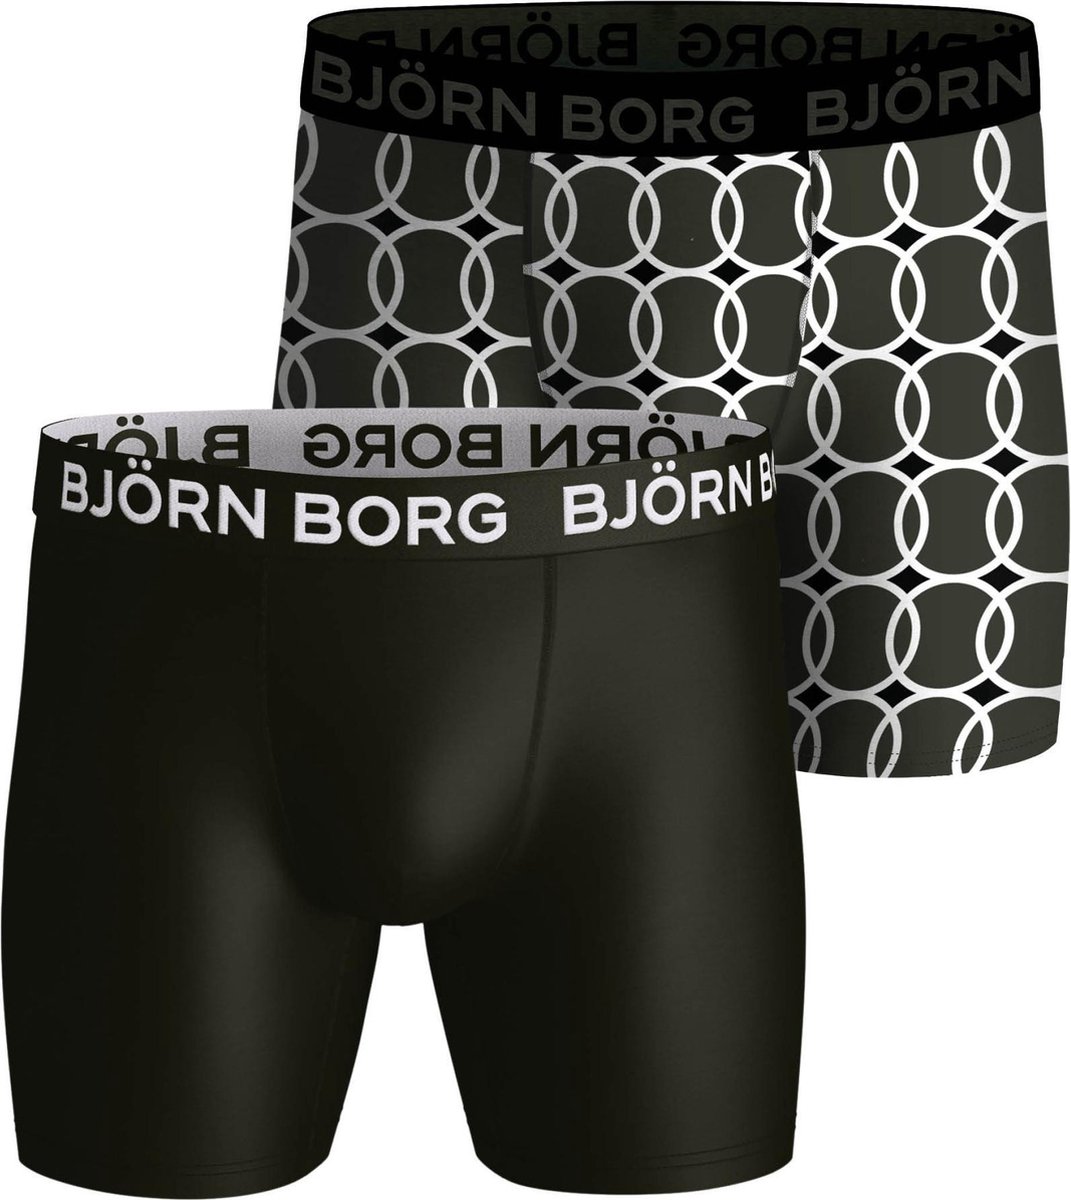 Björn Borg Boxershort Performance - Sportonderbroek - 2 stuks - Heren - Maat S - Groen & Print